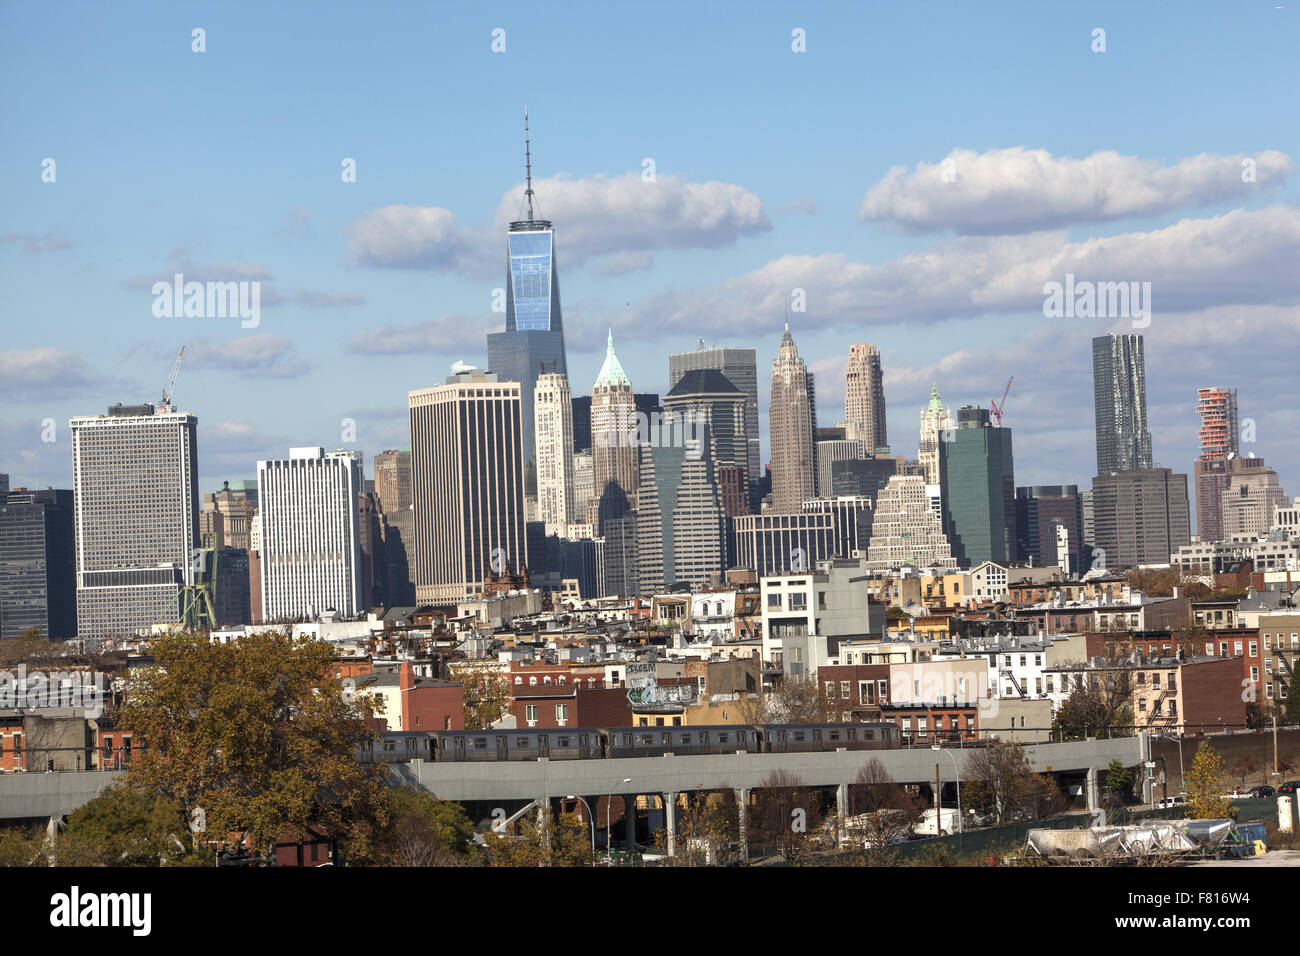 Looking across residential neighborhoods in Brooklyn with the lower Manhattan skyline looming up behind. NYC Stock Photo